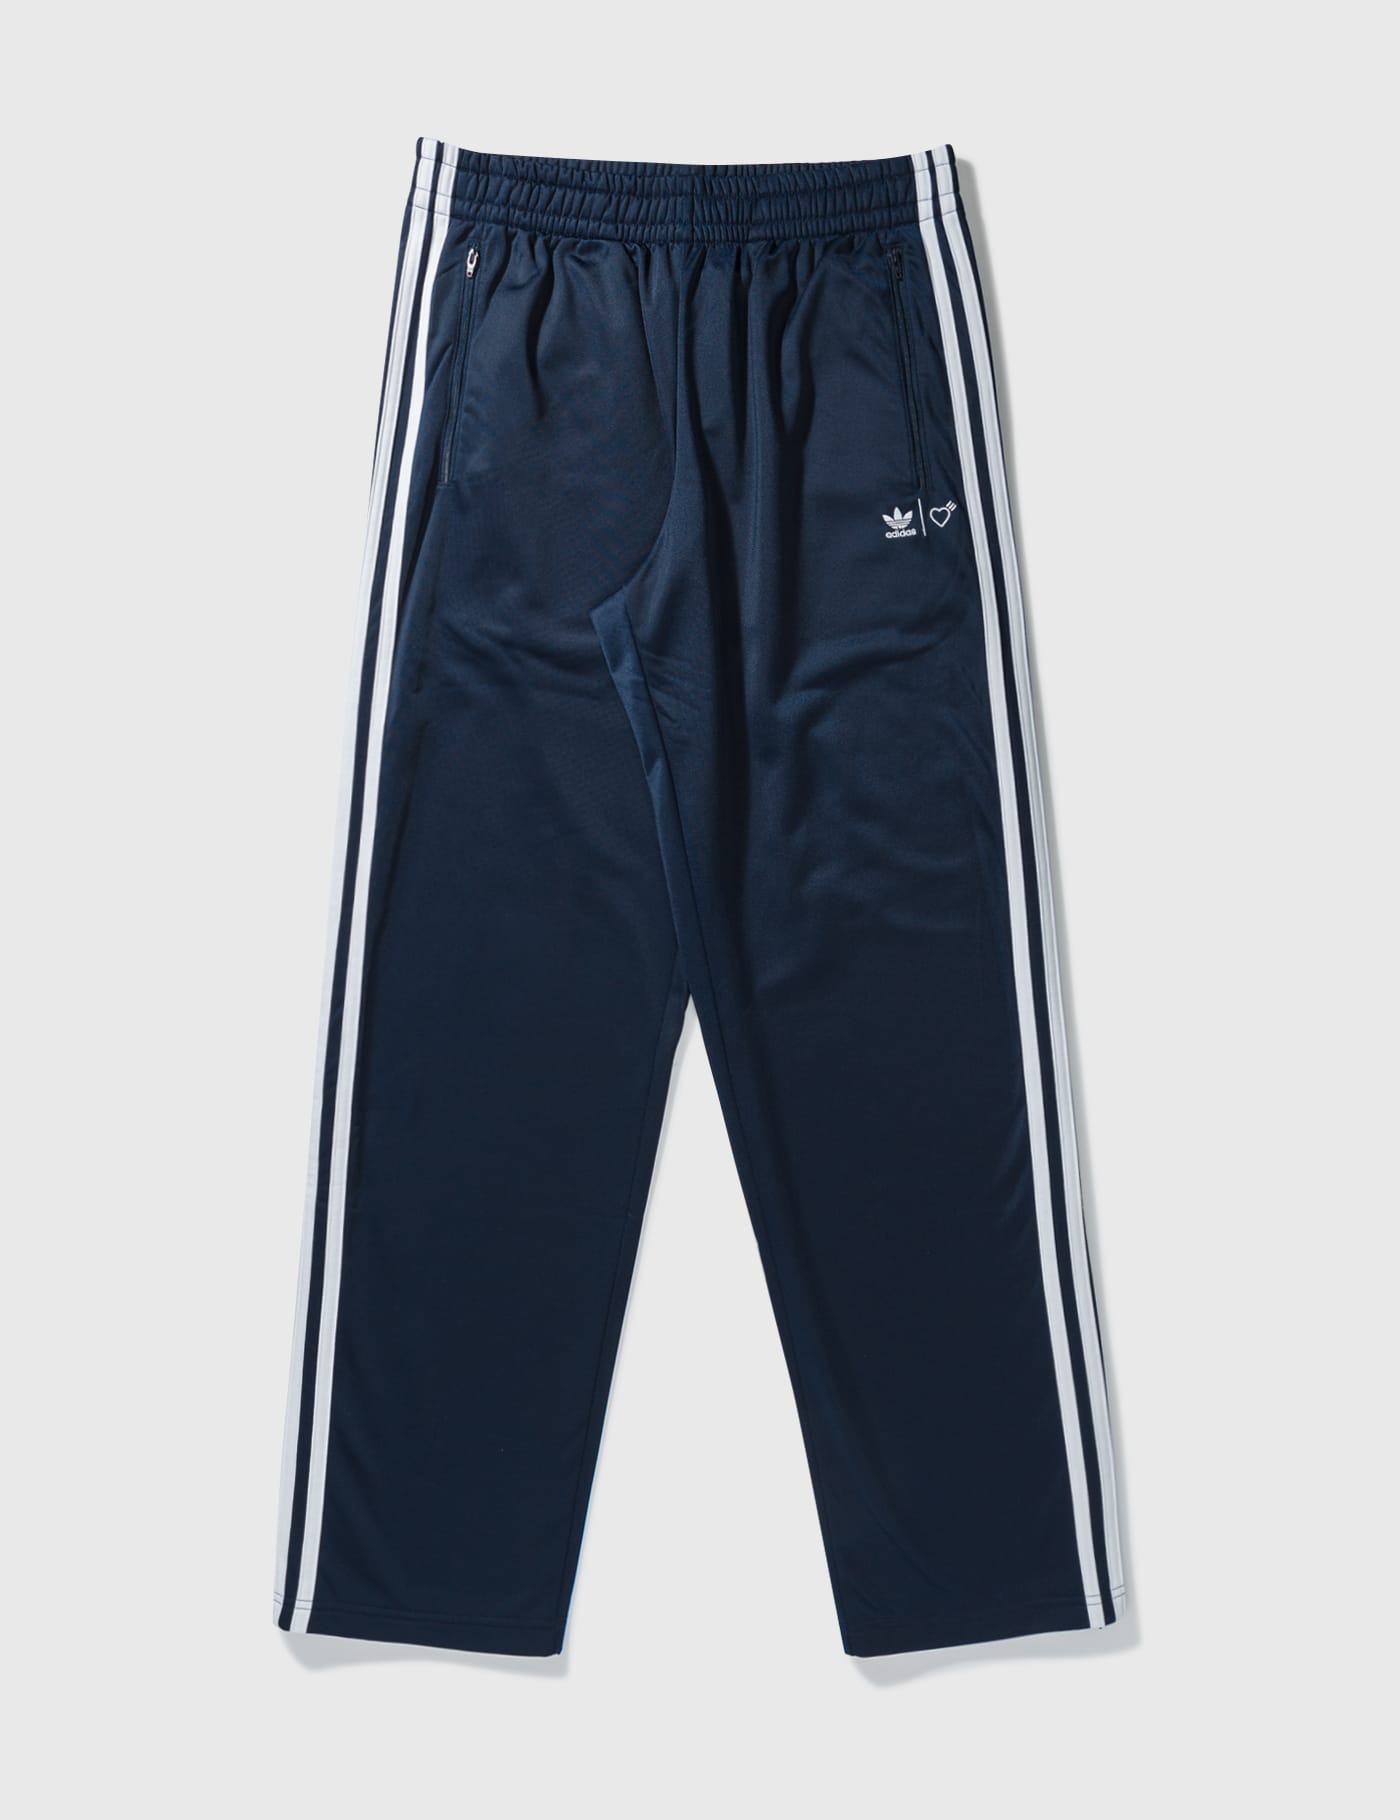 Adidas Originals Womens Adi-Firebird Track Pants Blue Pink Trefoil Logo Sz  XS 34 | eBay